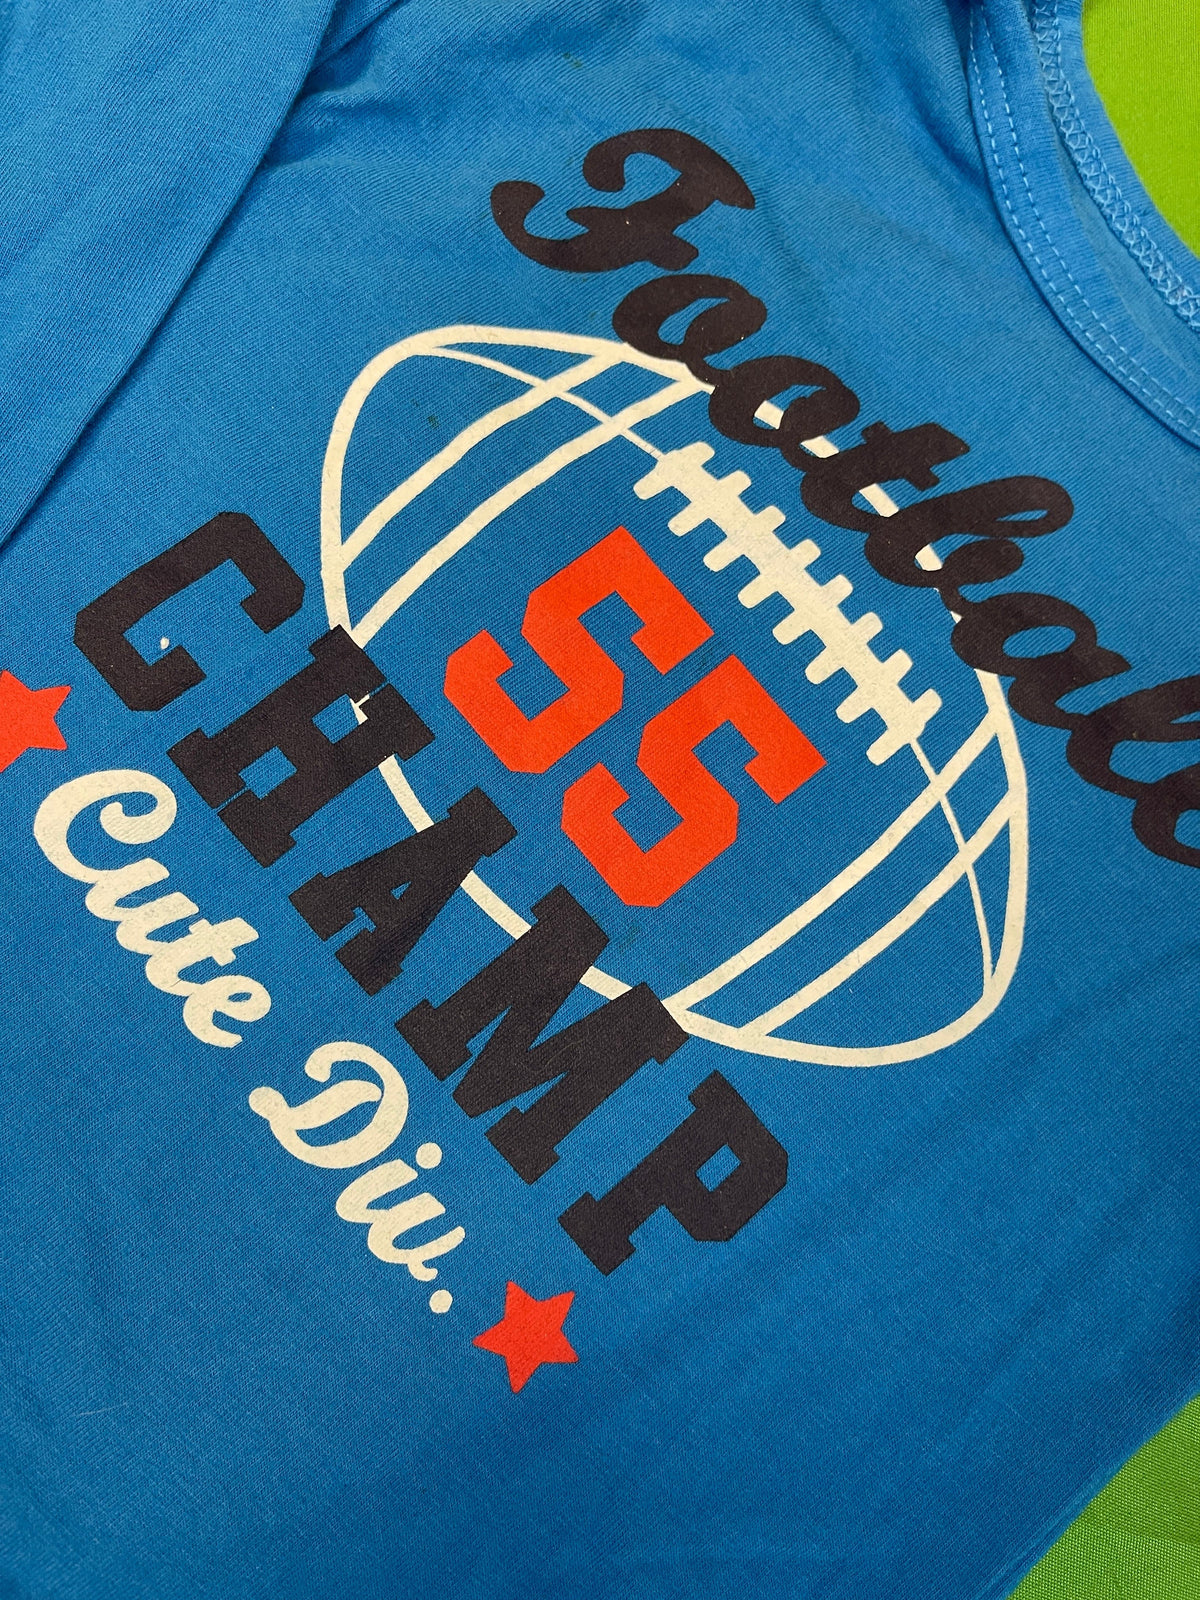 American Football Sky Blue "Football Champ" L/S T-Shirt Infant 12 Months